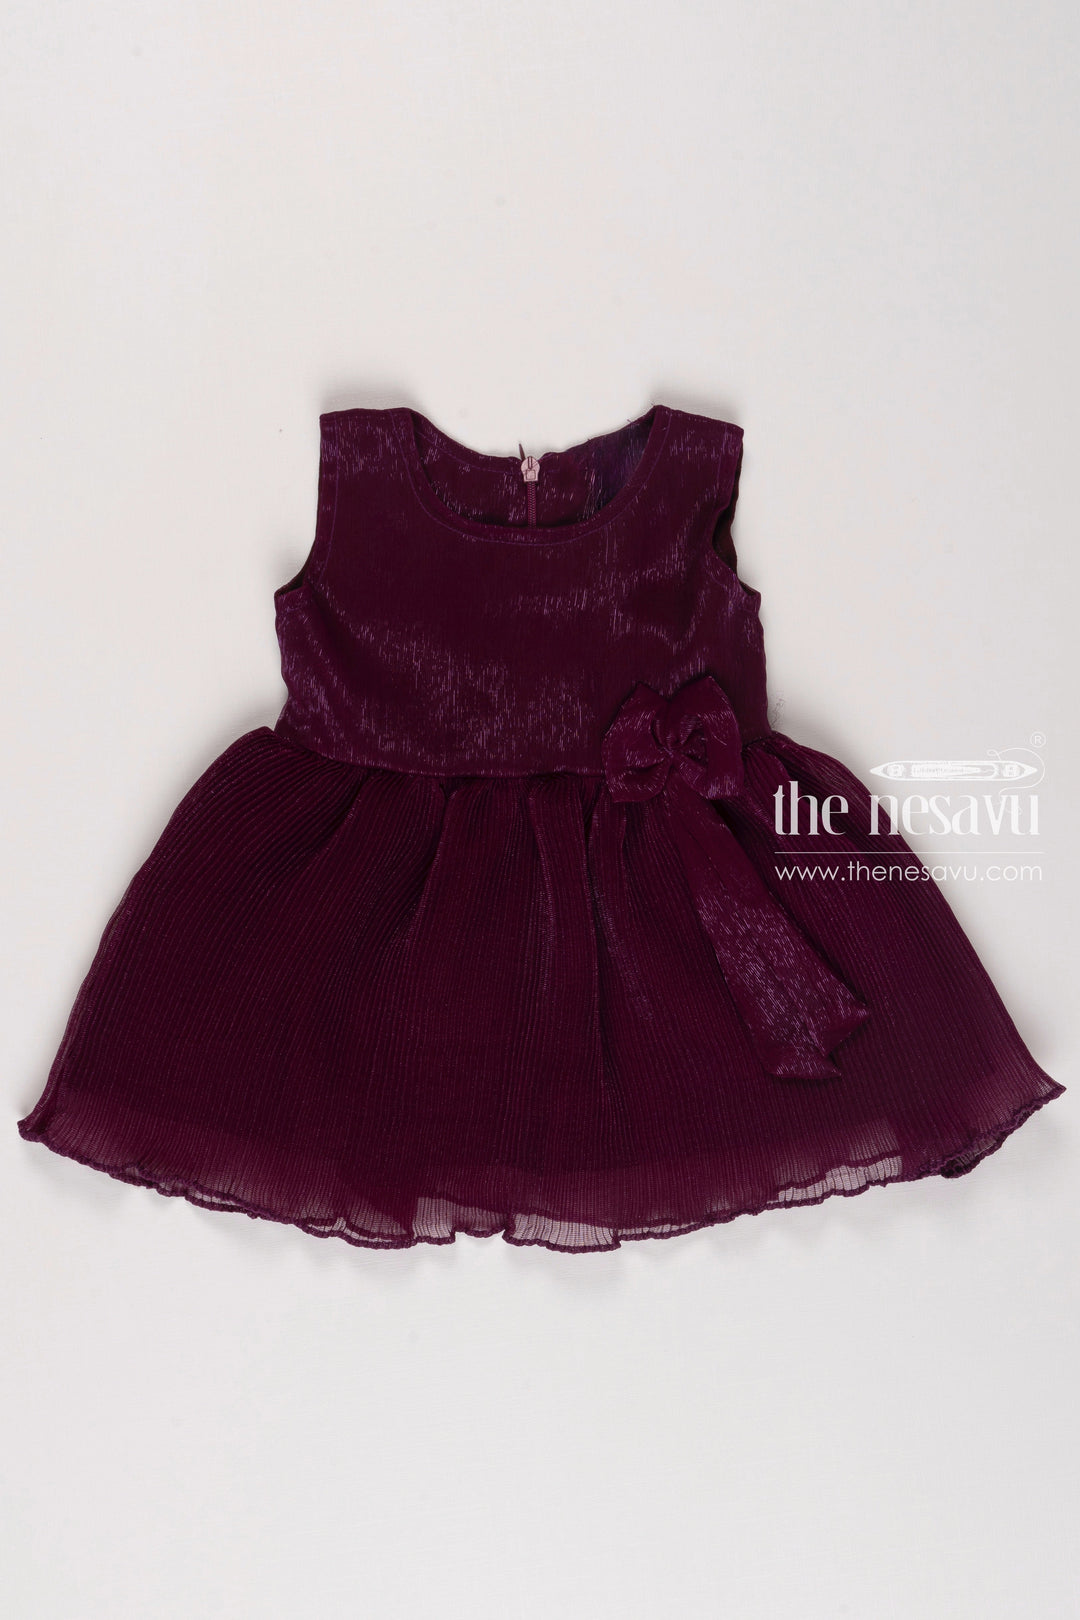 The Nesavu Baby Fancy Frock Burgundy Bliss Tulle Frock Party Wear Gown for Girls Nesavu 14 (6M) / Purple BFJ508B-14 Girls Burgundy Tulle Sleeveless Dress | Elegant Occasion Wear | The Nesavu